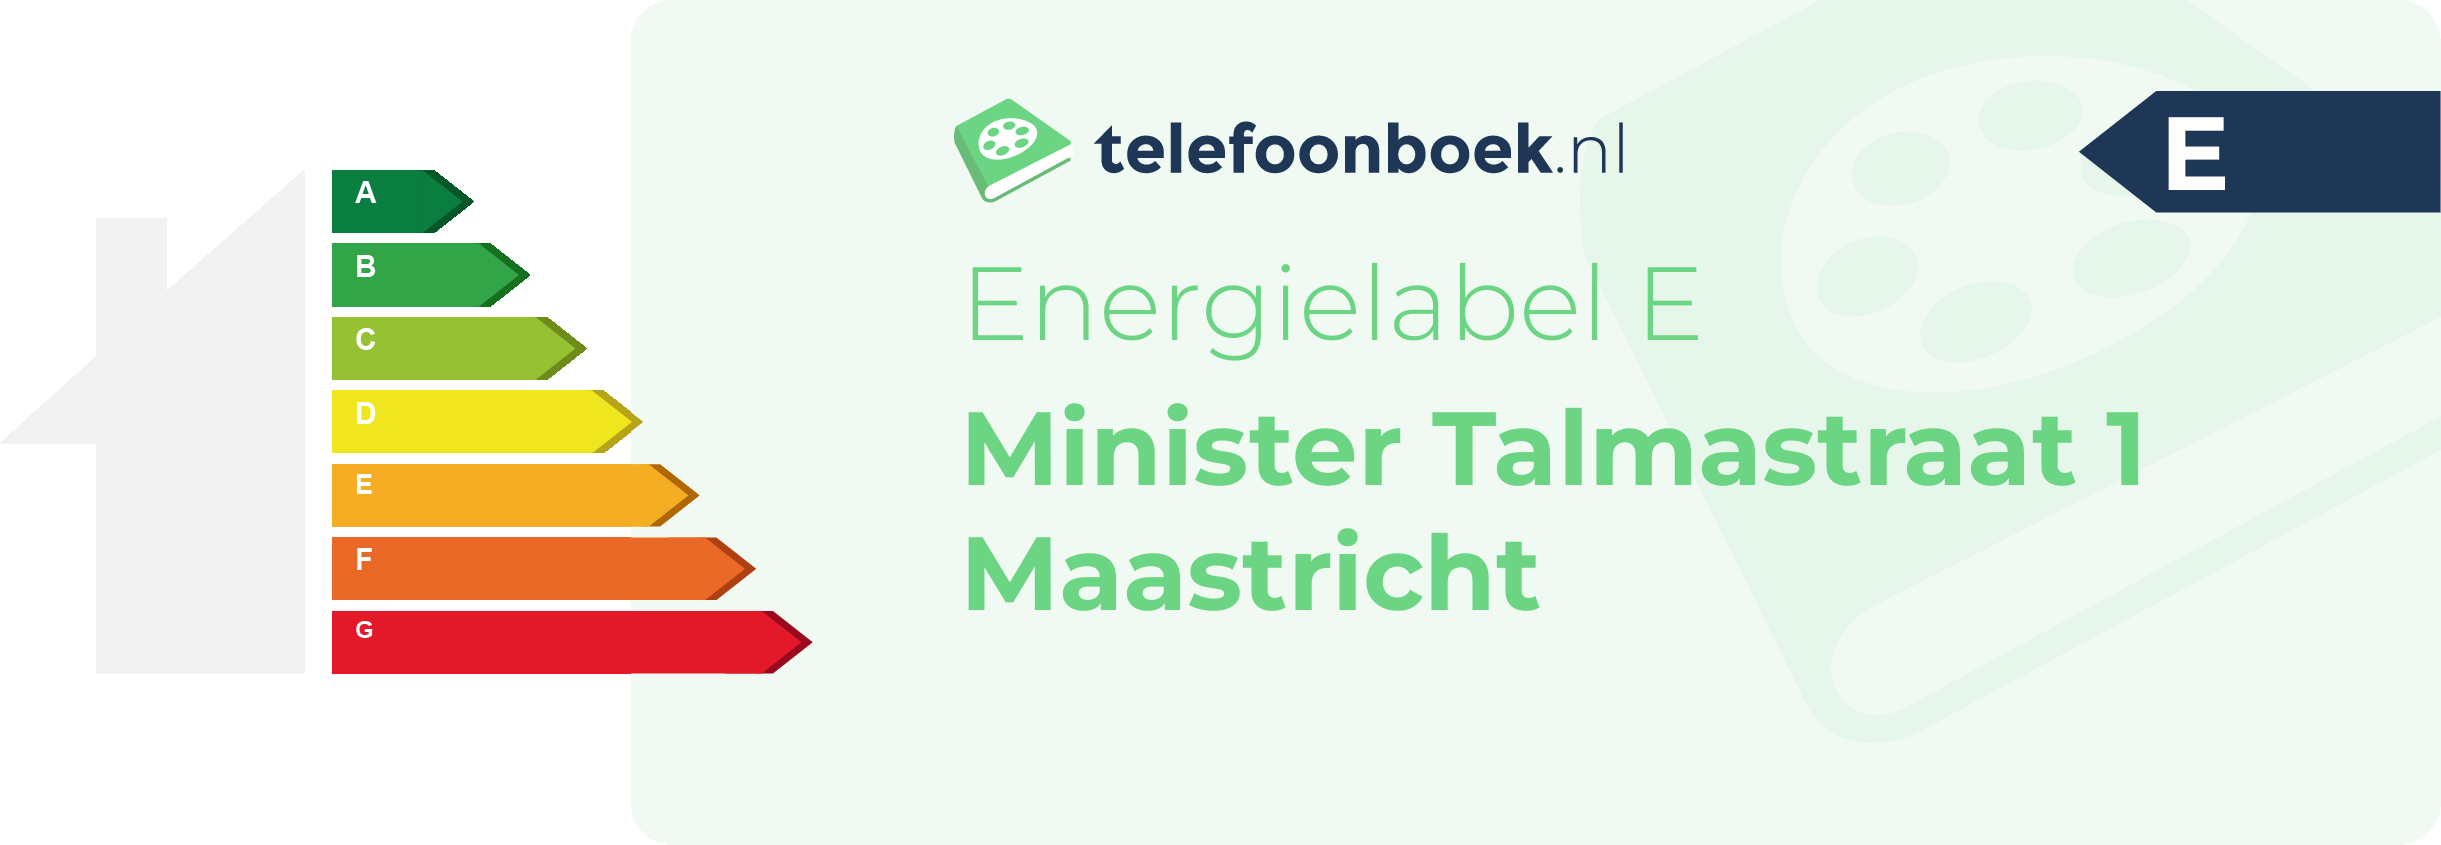 Energielabel Minister Talmastraat 1 Maastricht